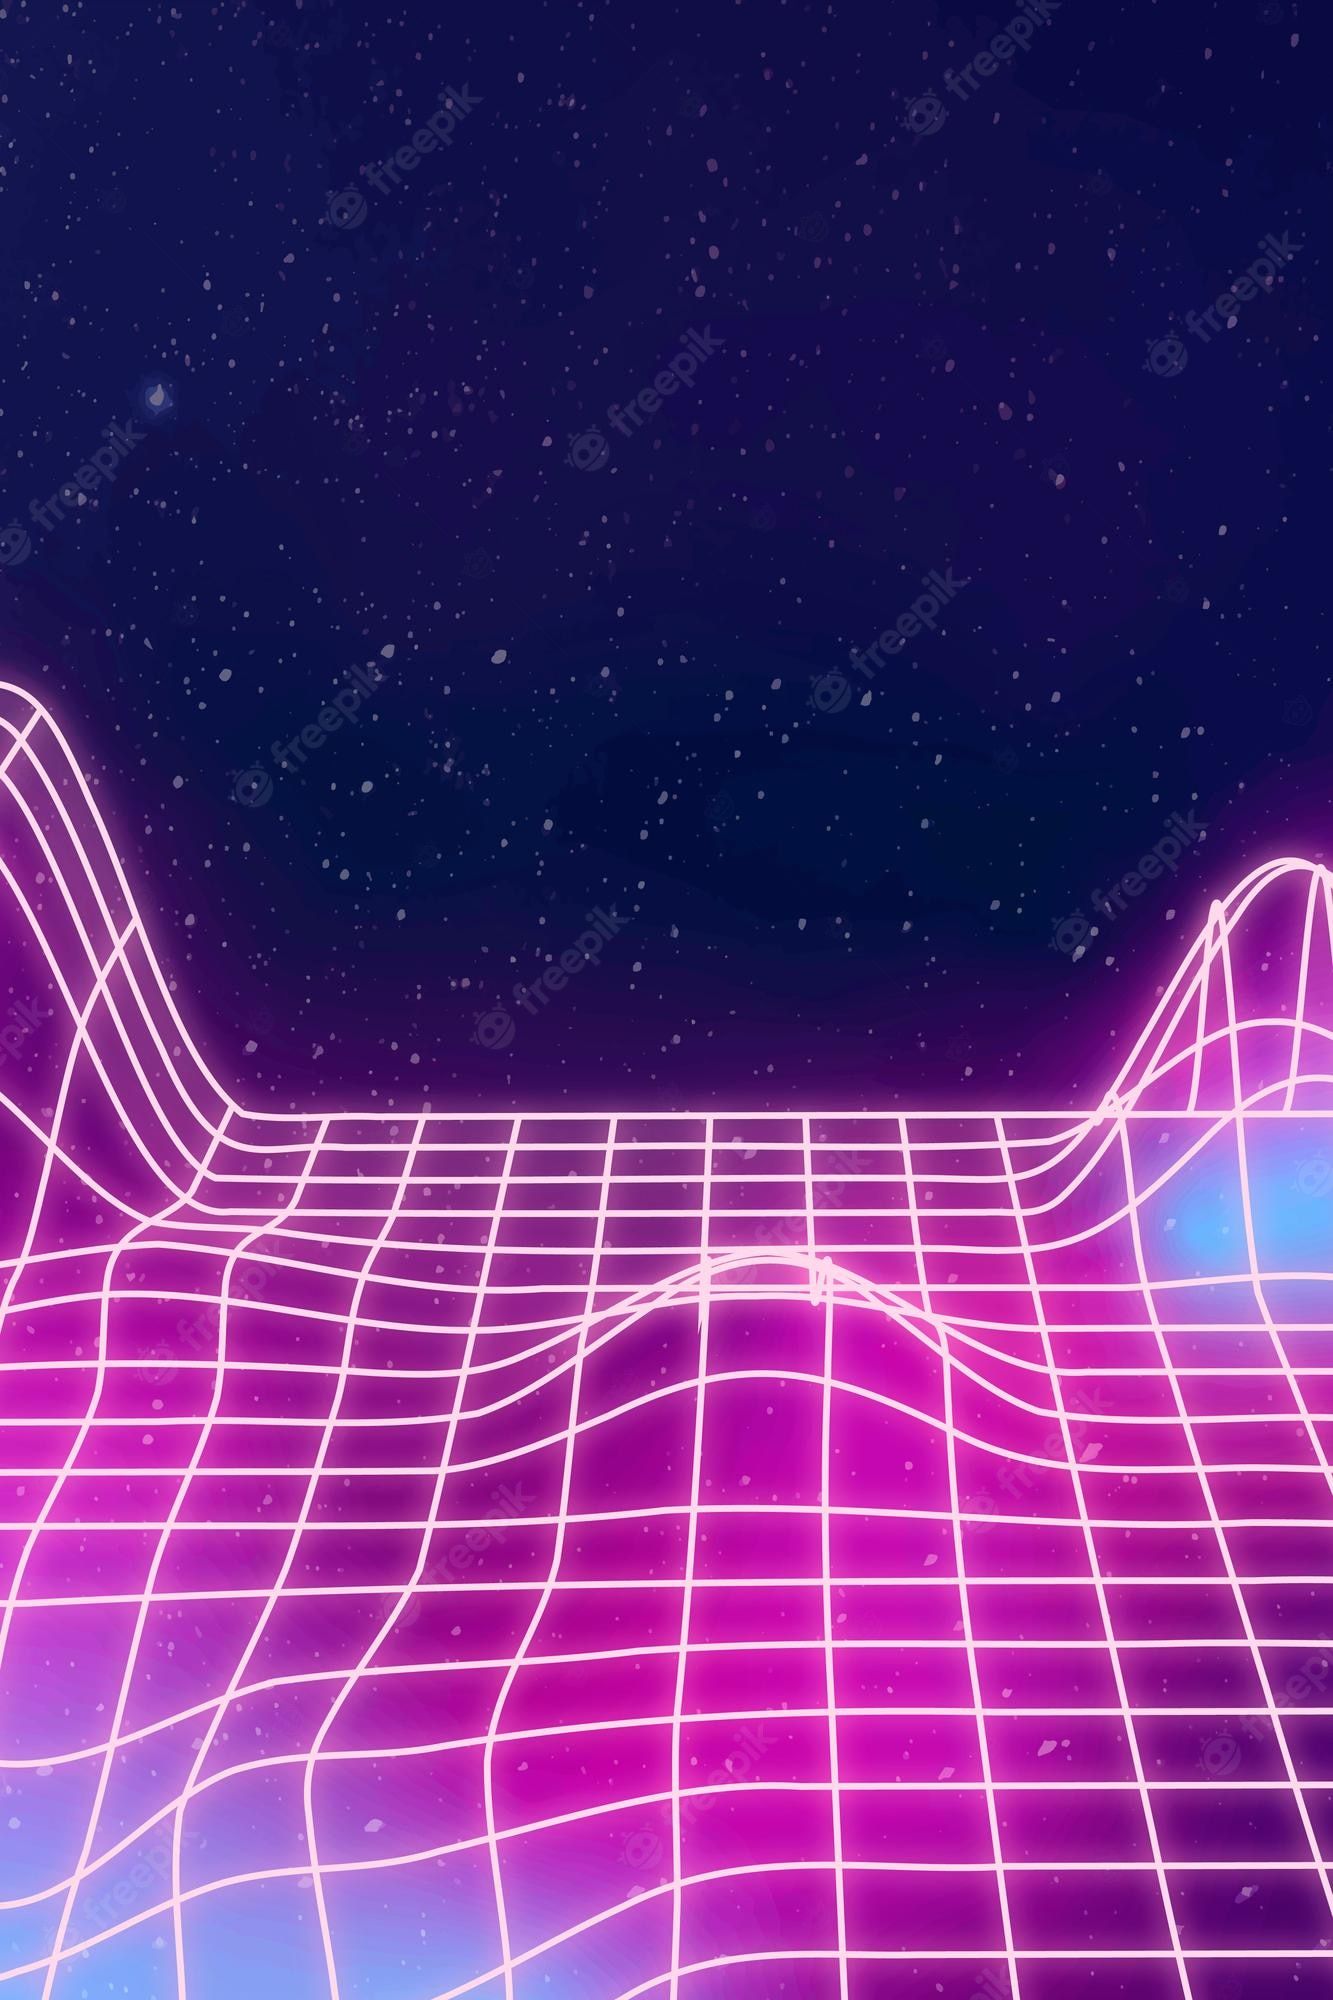 Retro 80s neon grid background - Synthwave